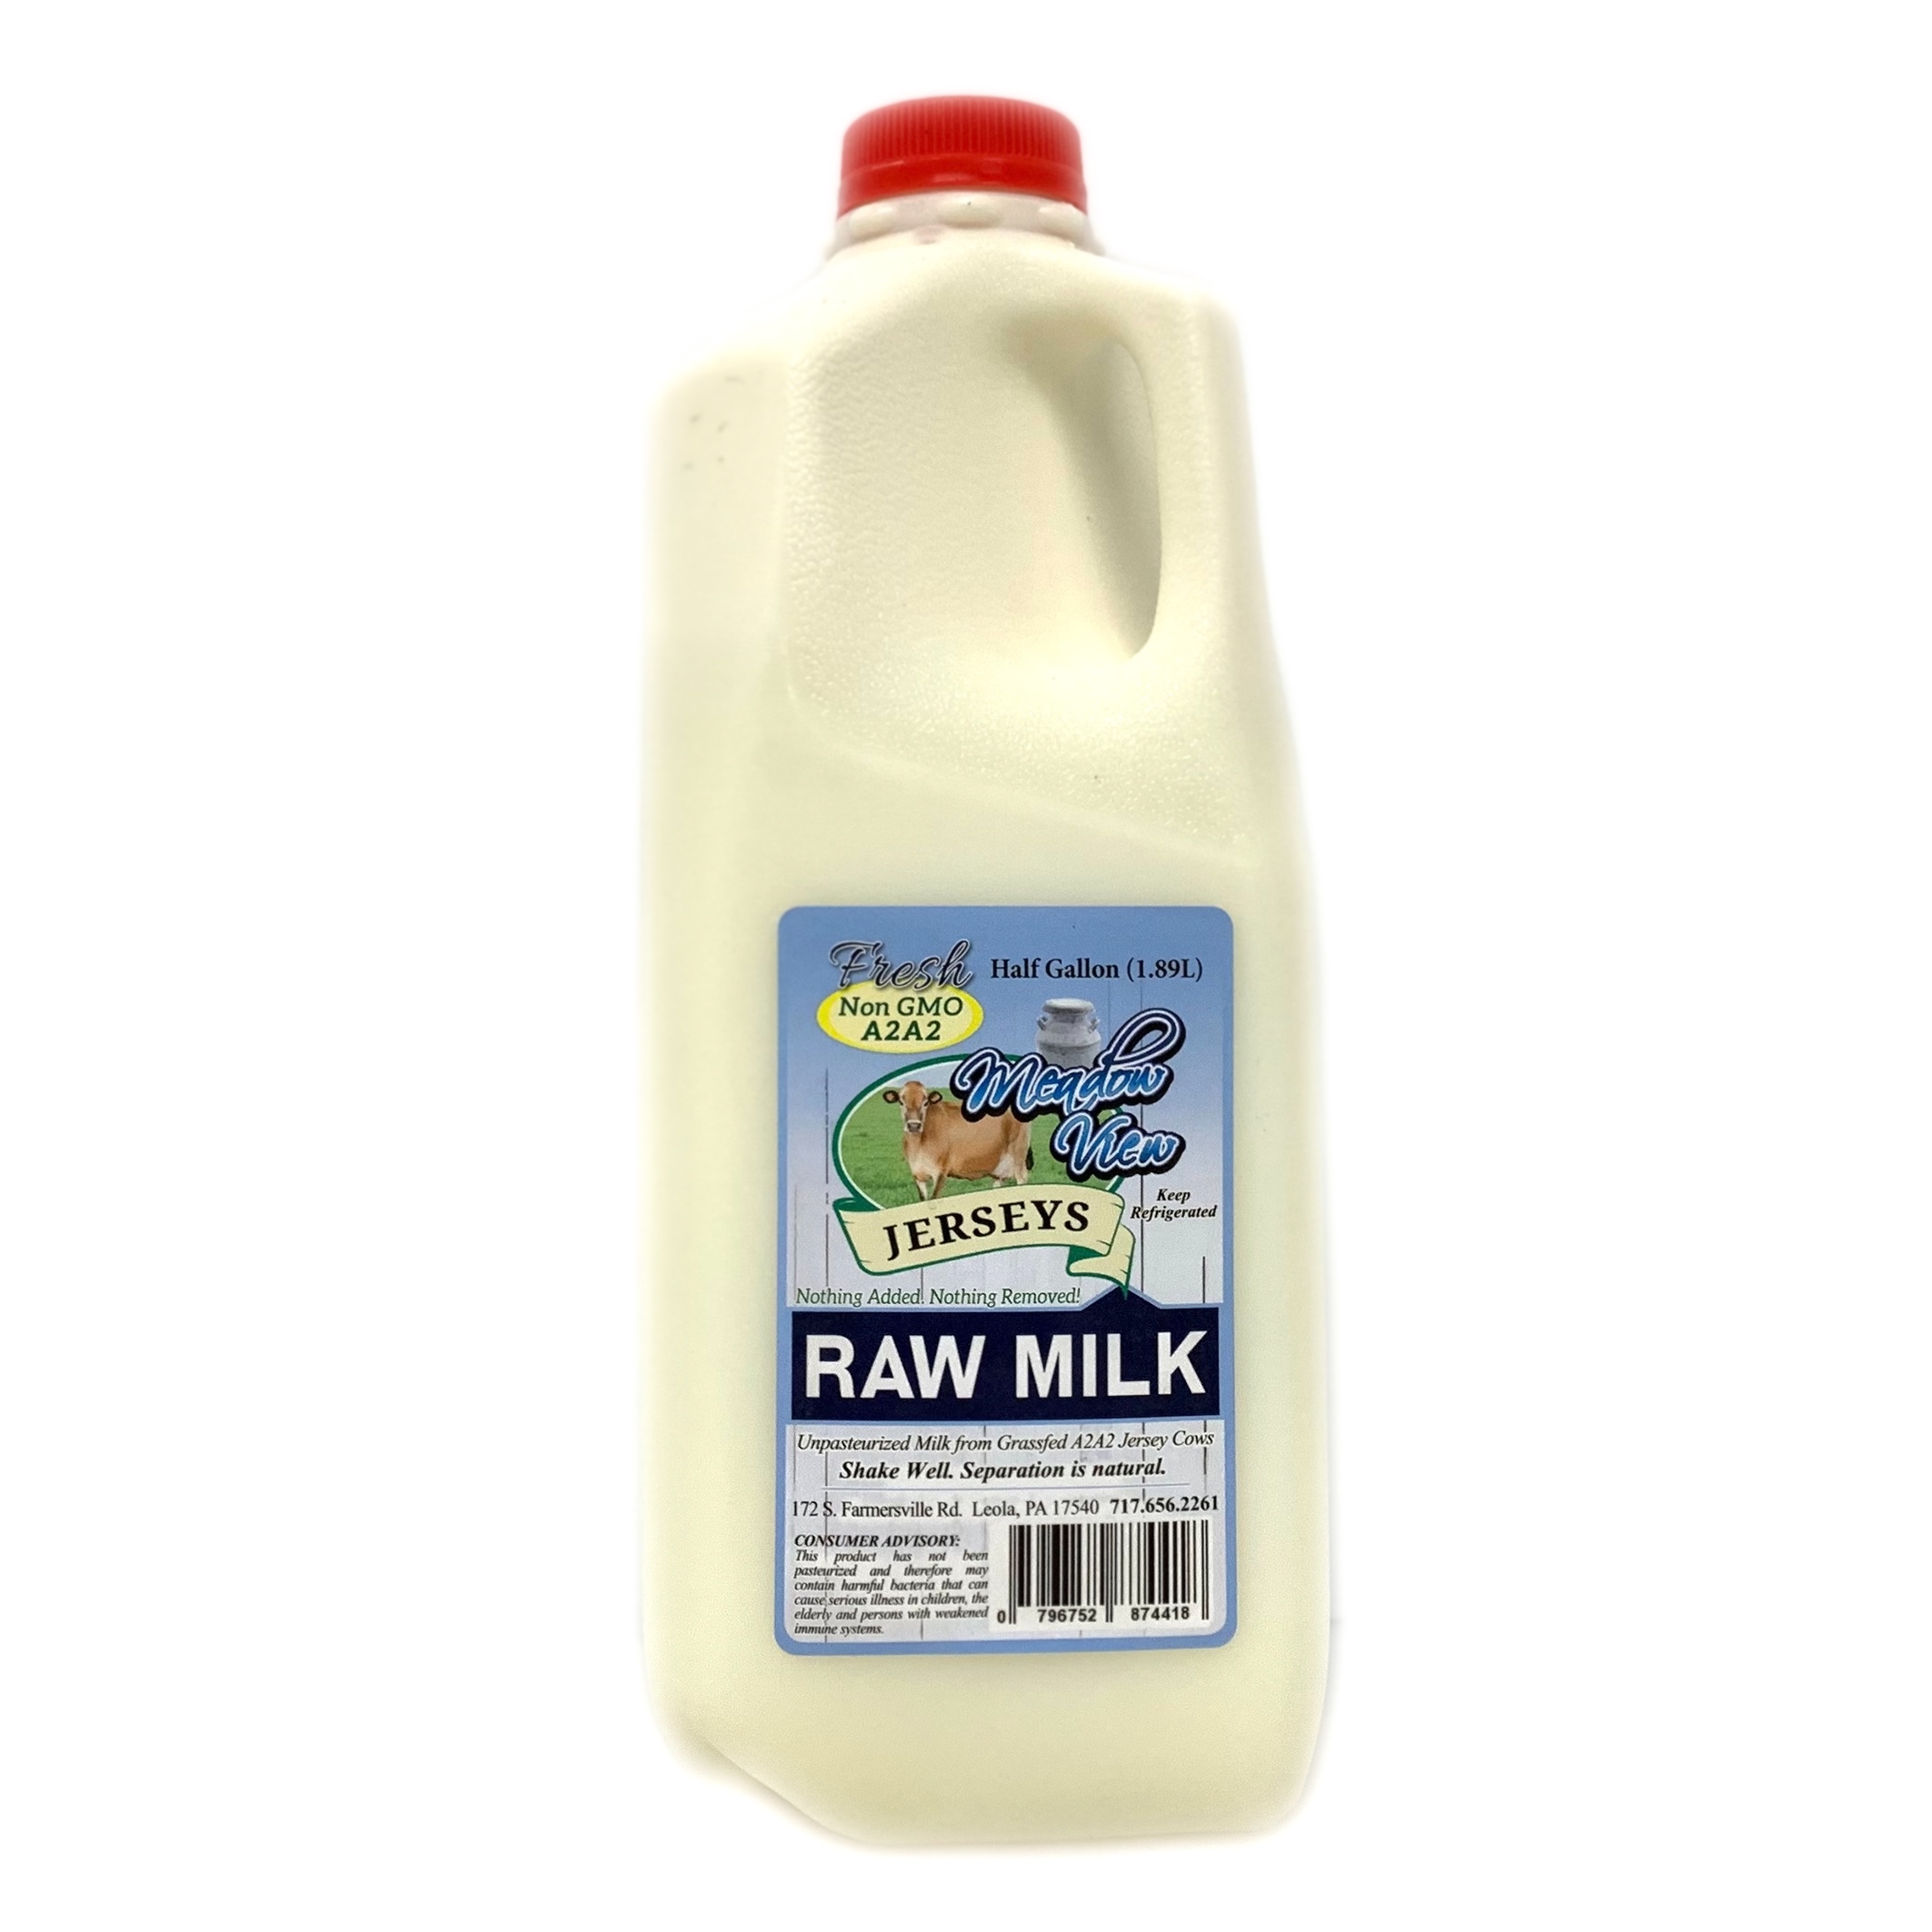 1 Gallon Raw Cow Milk (plastic)